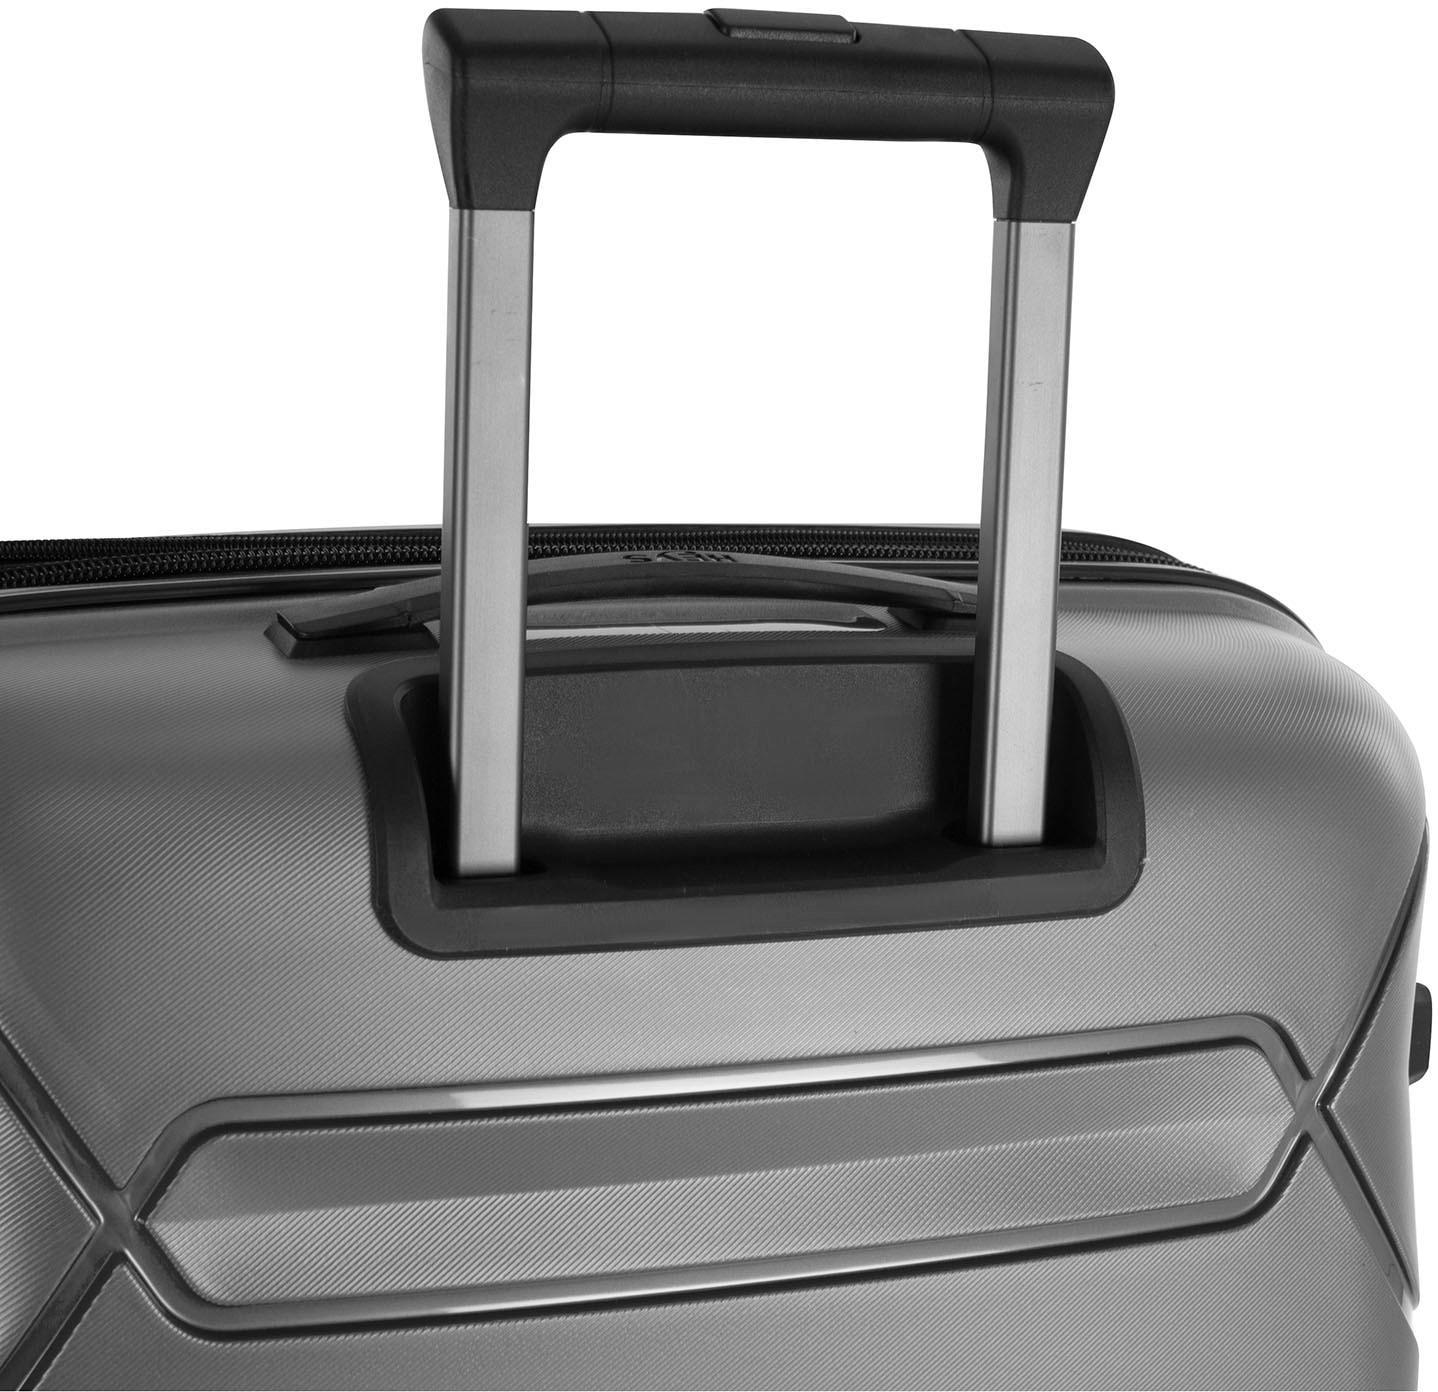 Heys Hartschalen-Trolley »Milos grau, 76 cm«, 4 Rollen, Hartschalen-Koffer Koffer groß TSA Schloss Volumenerweiterung